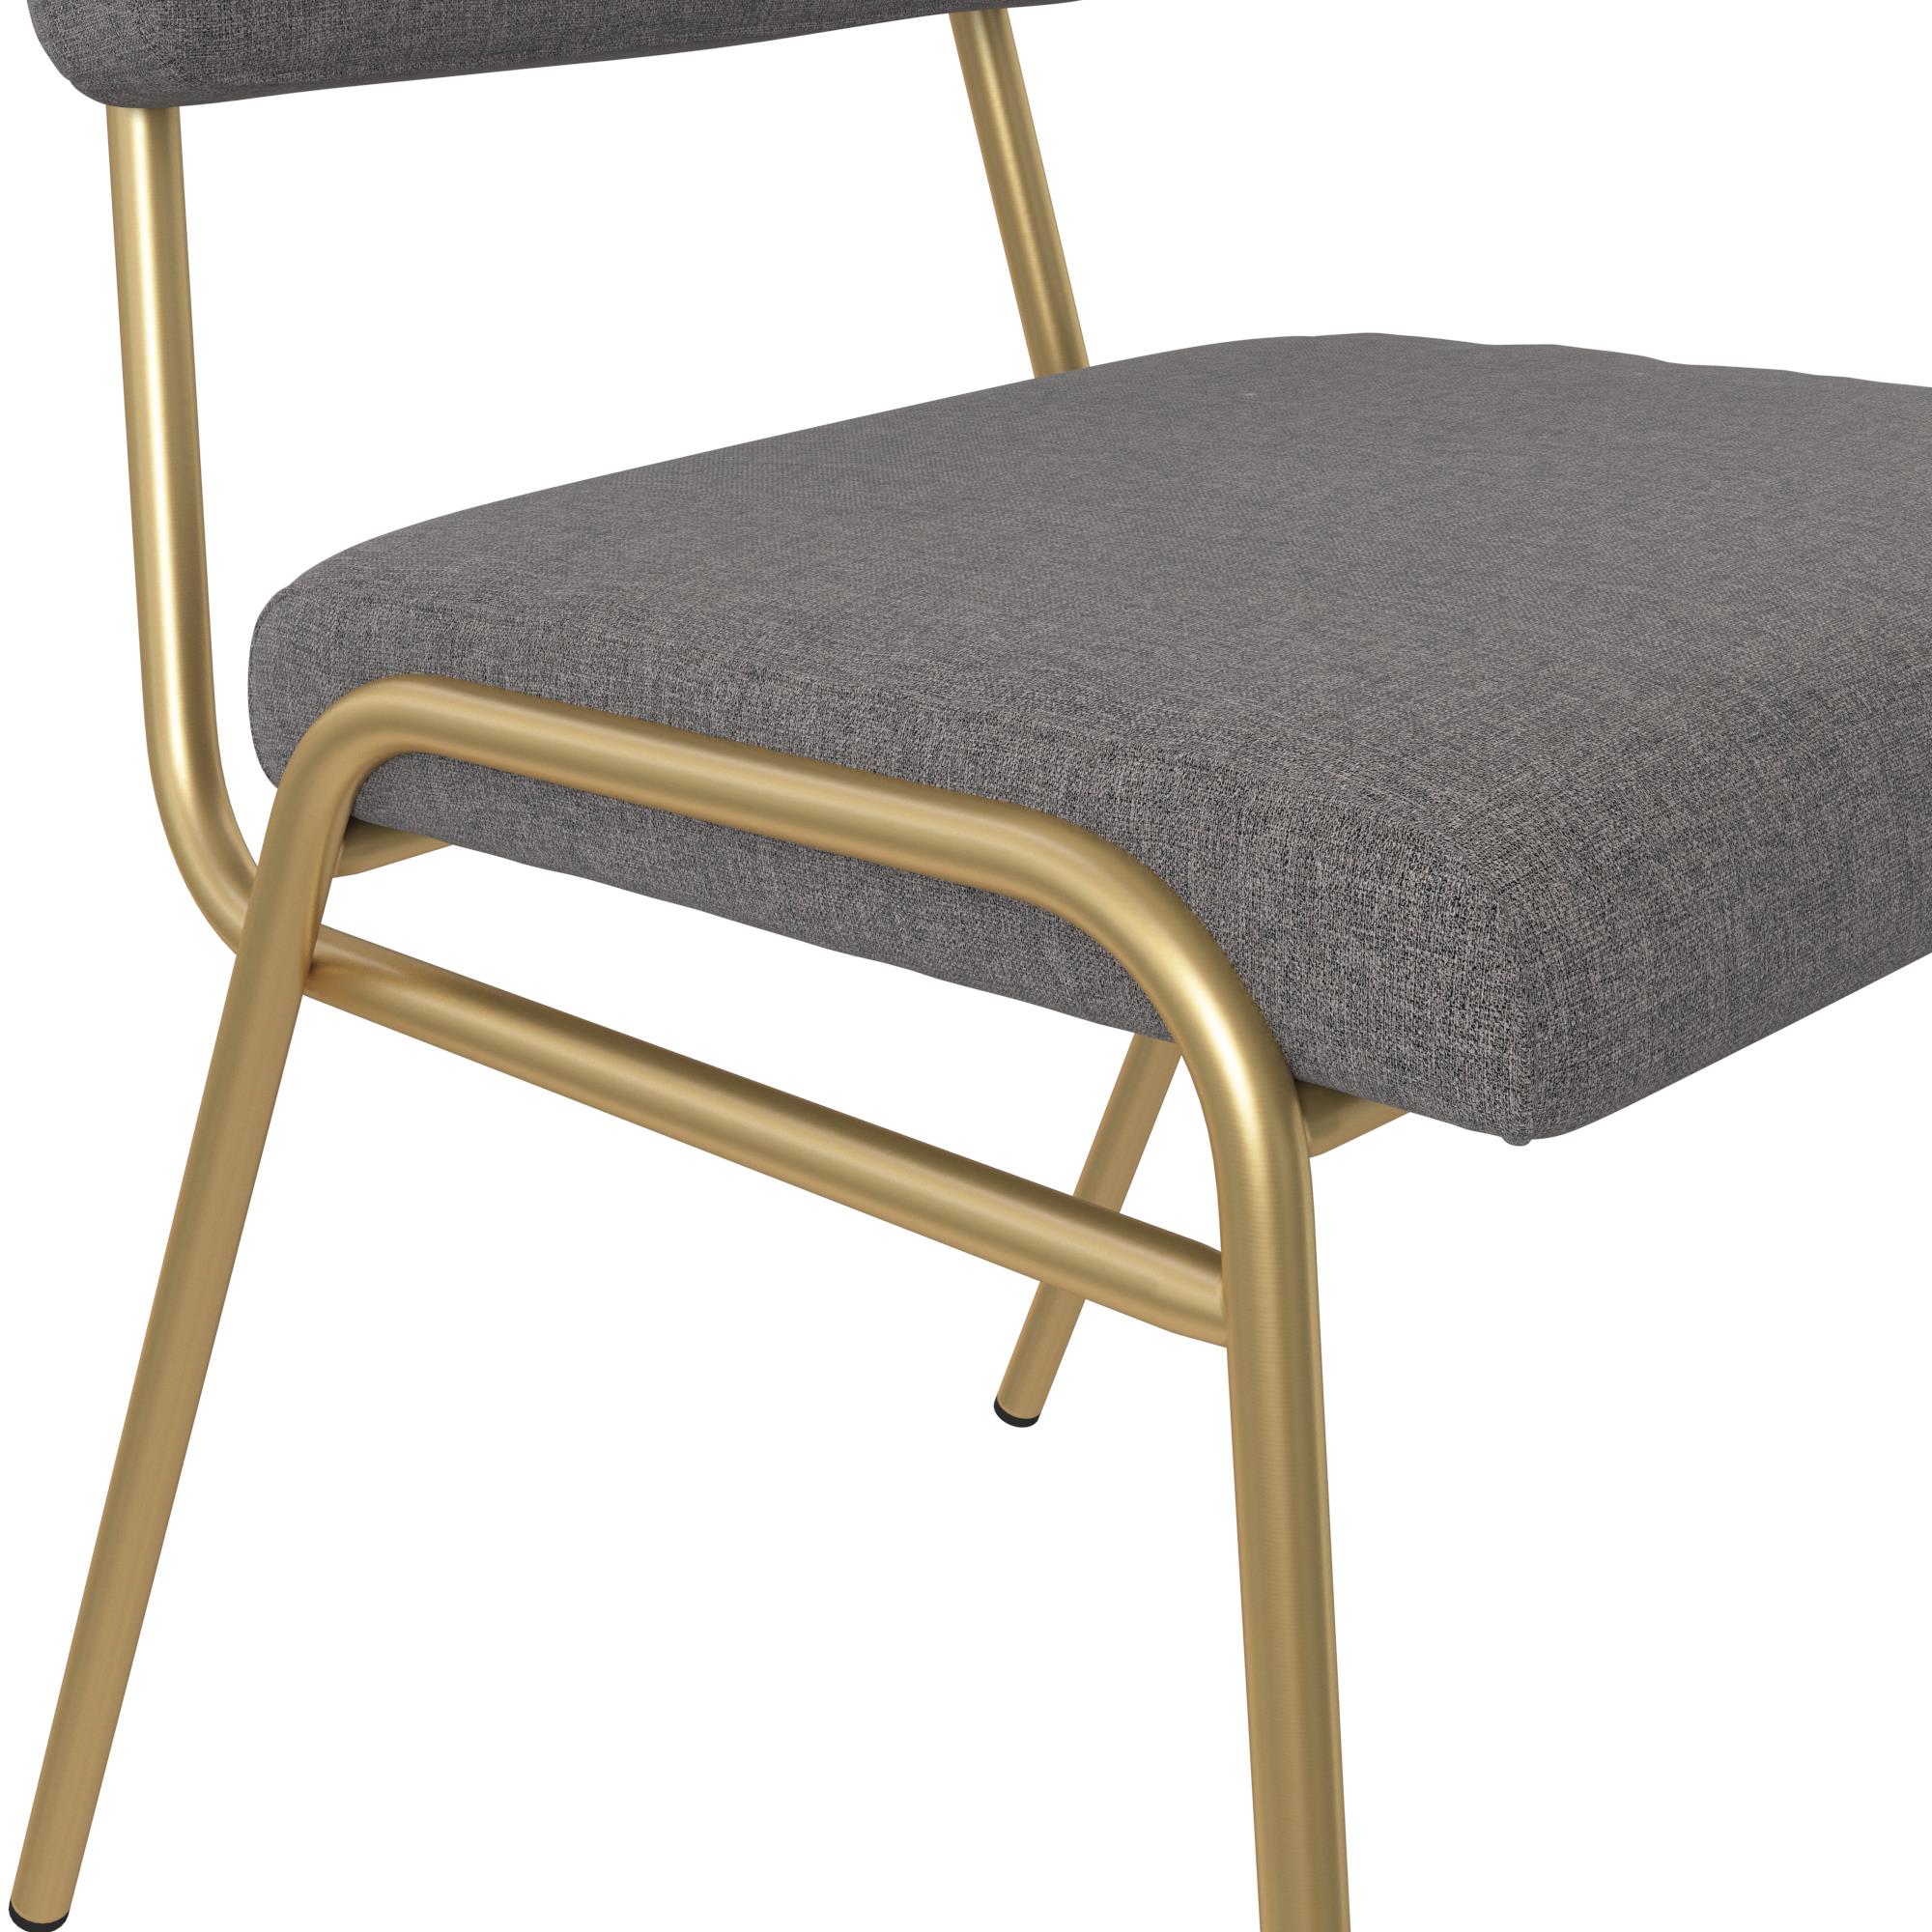 Novogratz Lex Upholstered Dining Chair, Gold Frame & Light Grey Linen Upholstery - image 10 of 14